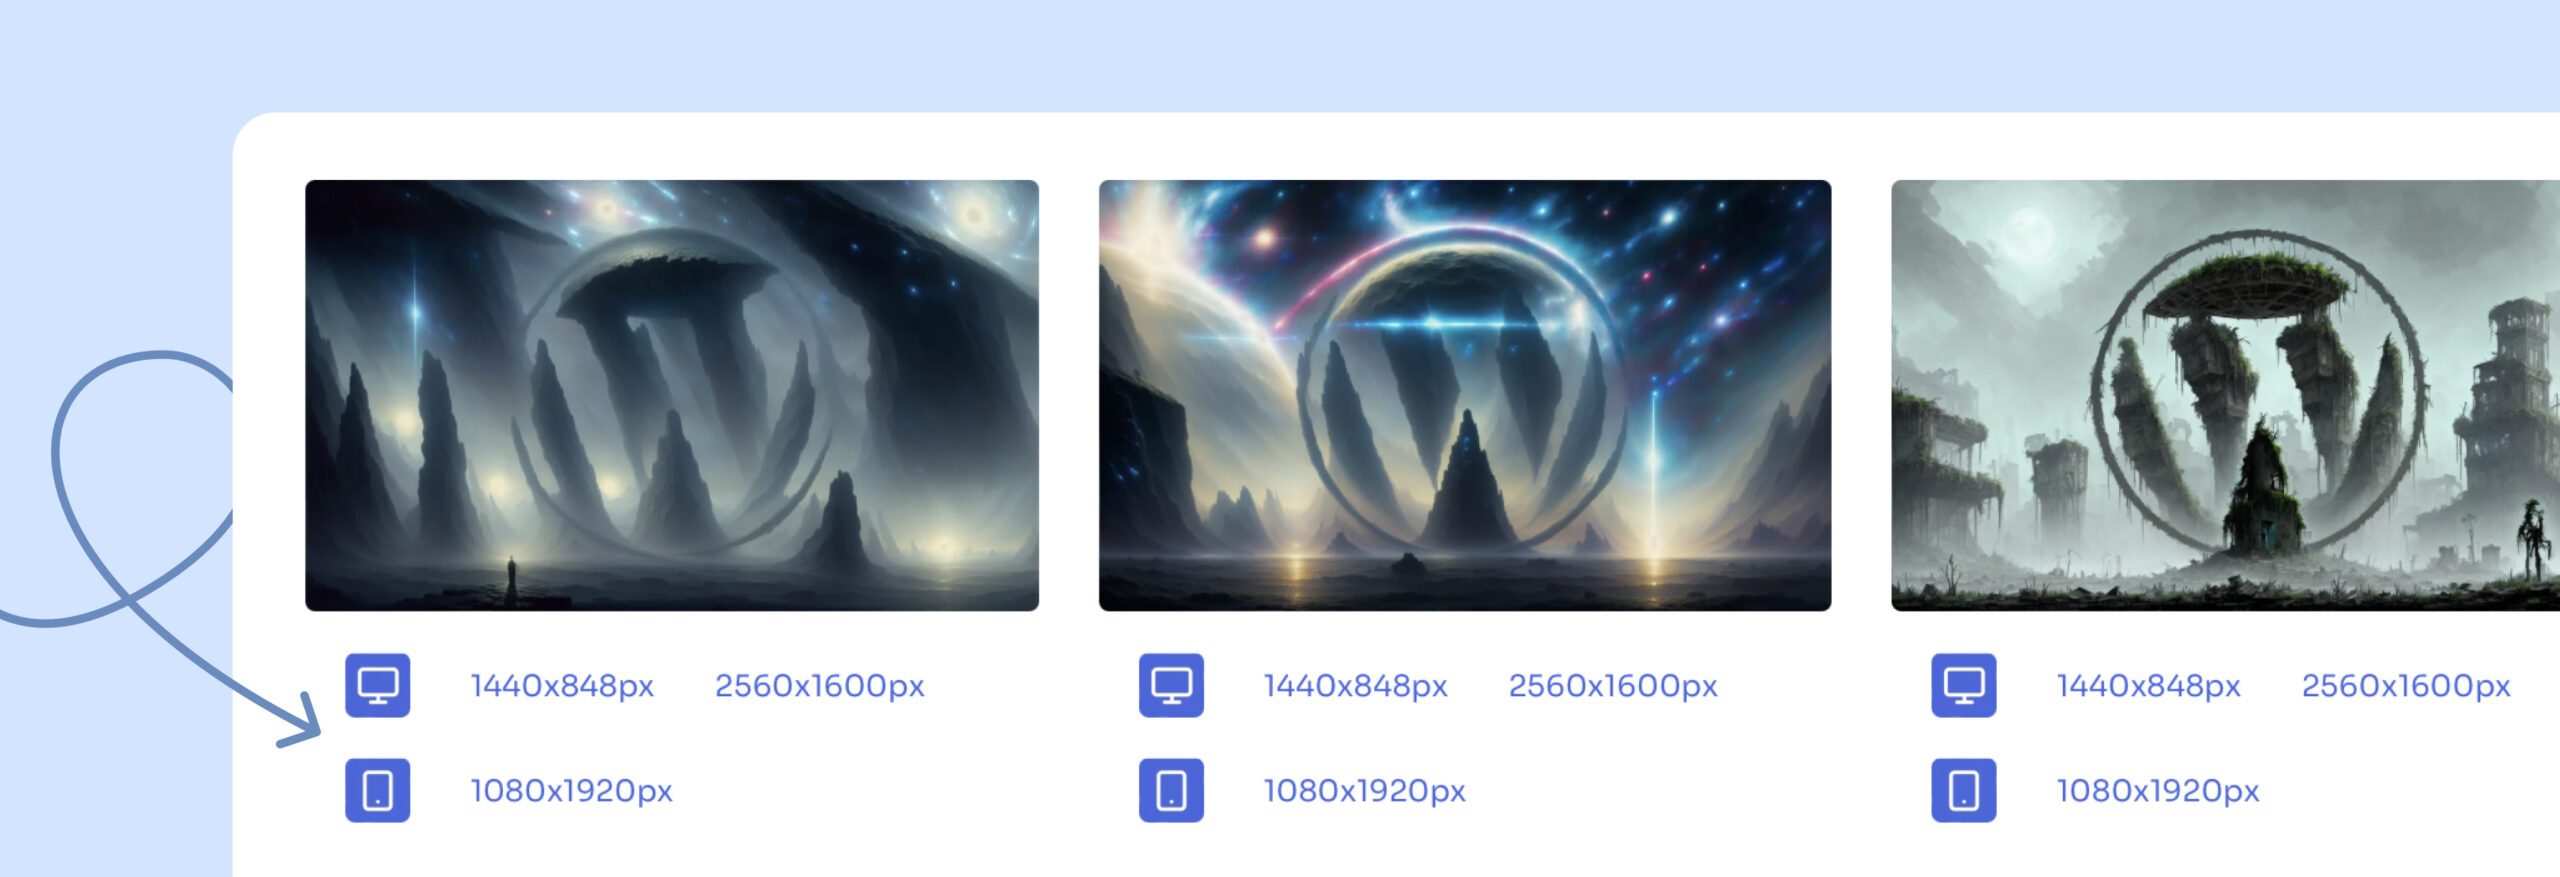 WordPress wallpapers screenshot